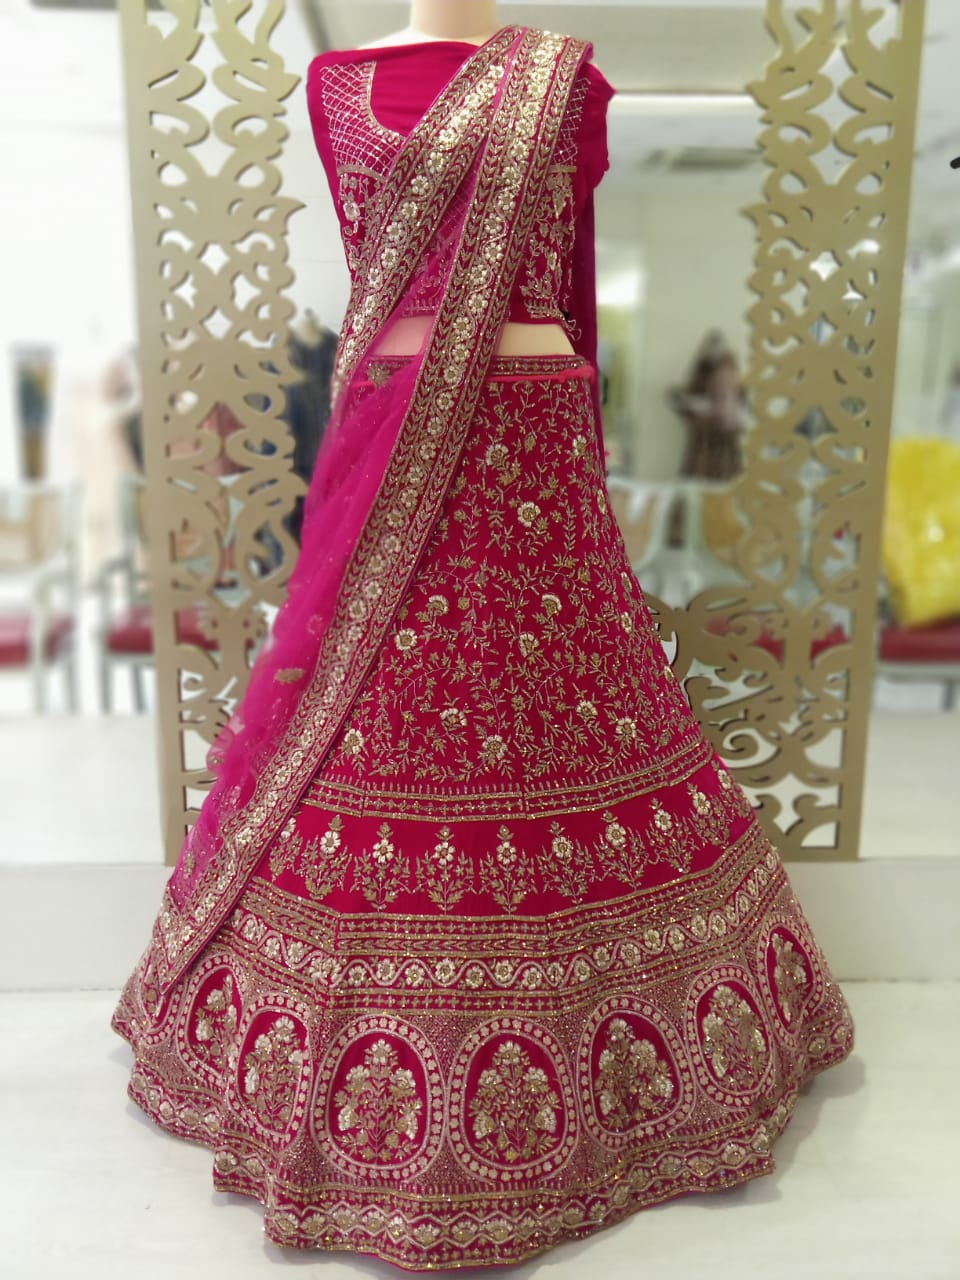 ShedTheRed wedding lehenga! Here are 25 offbeat, eye-catching hues instead!  | Fashion | Bride | WeddingSutra